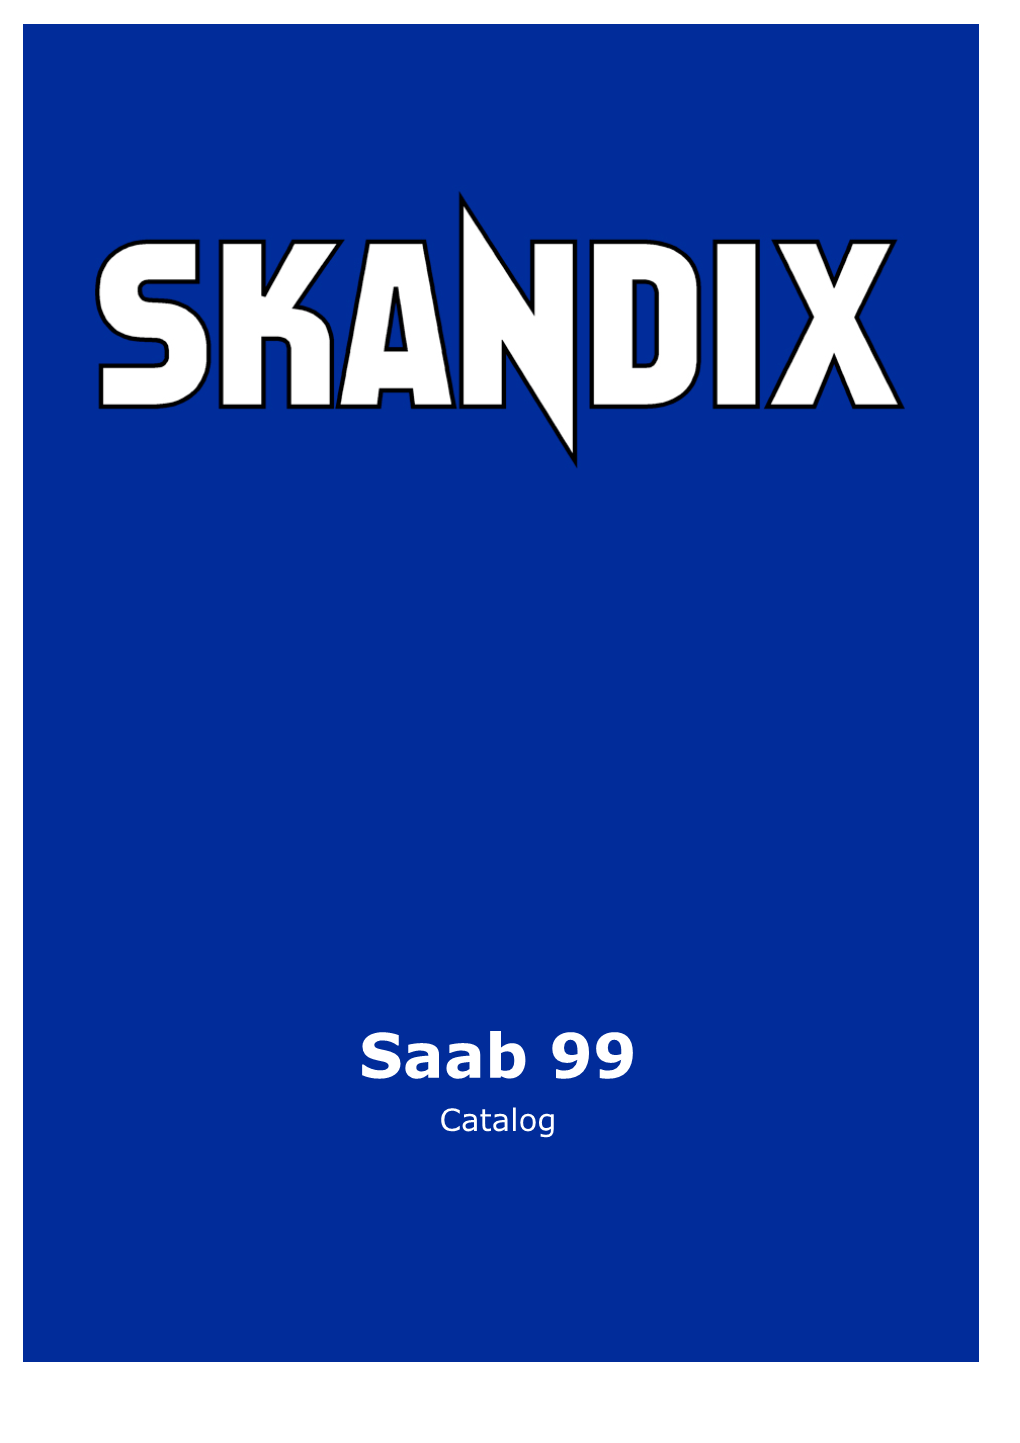 SKANDIX Catalog: Saab 99